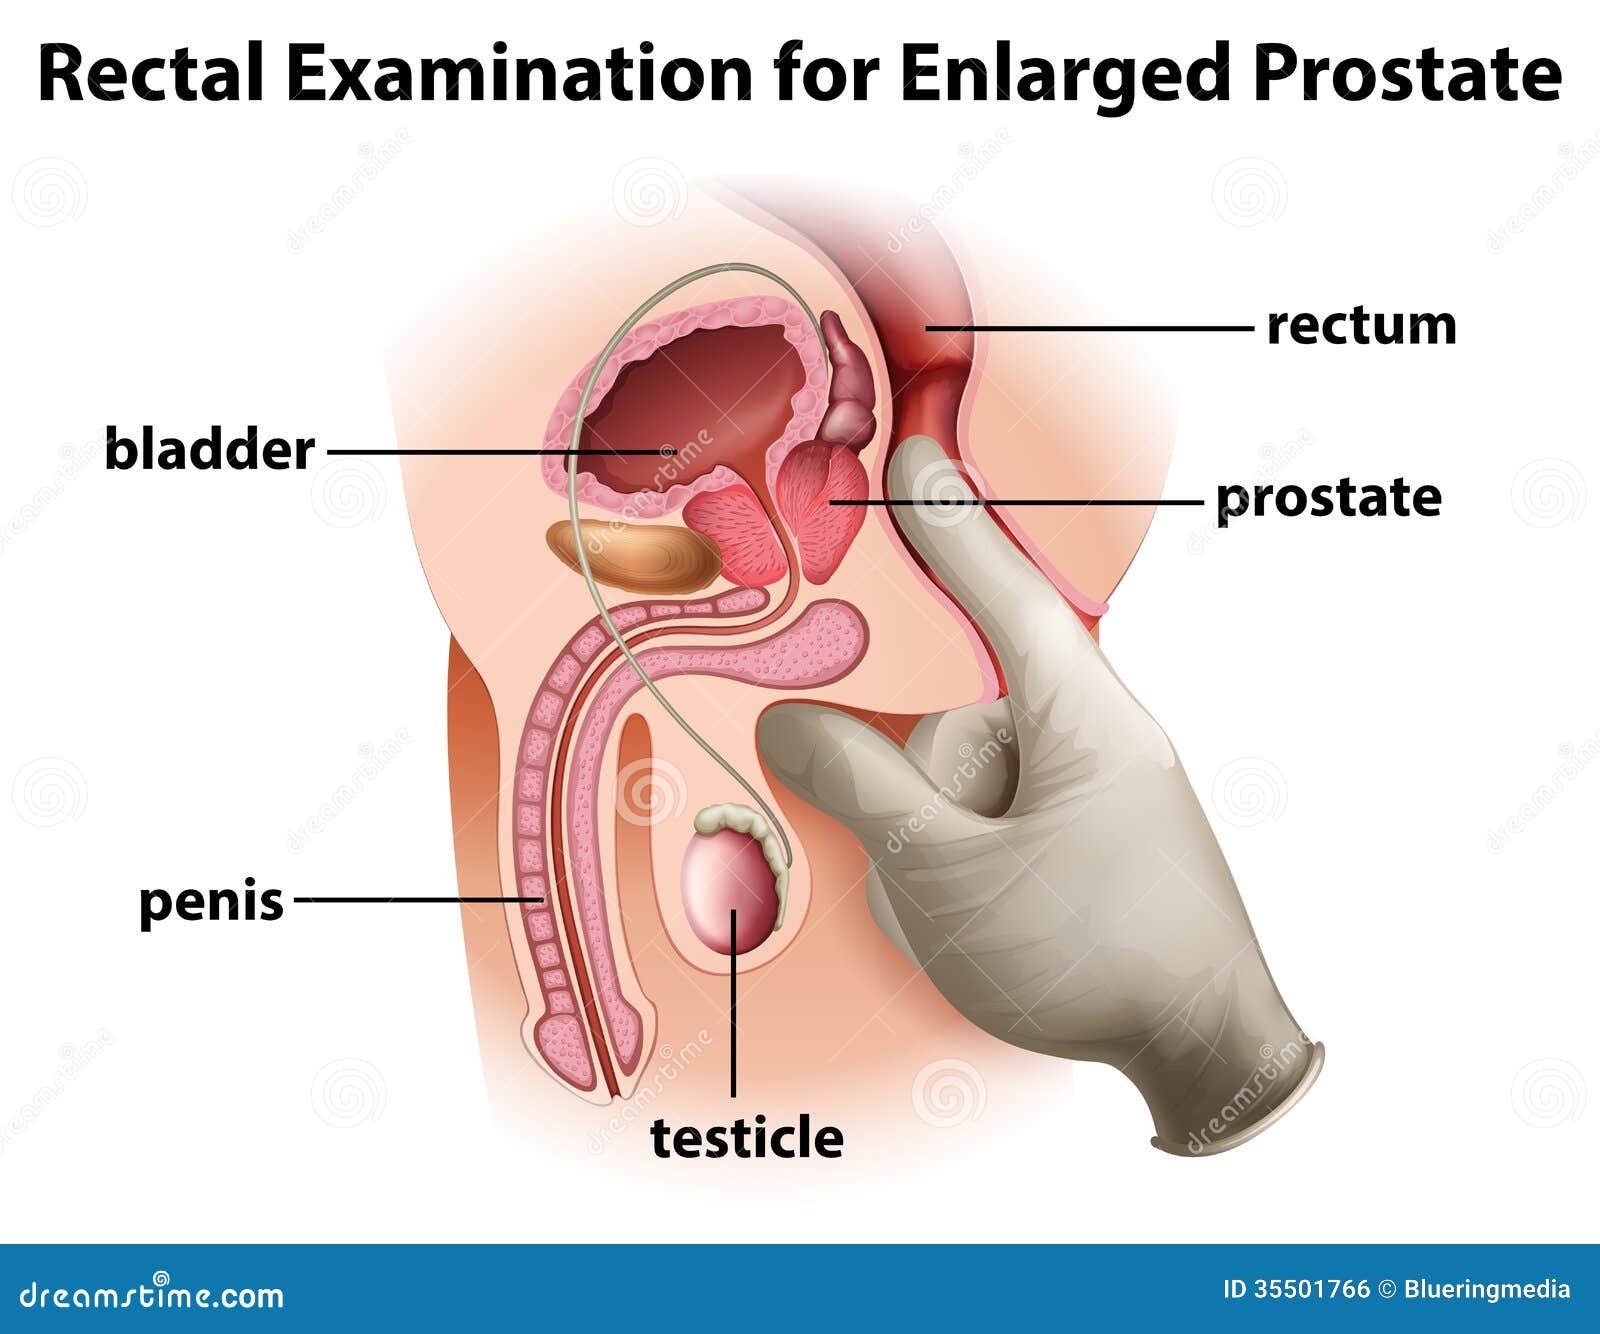 ce inseamna operatia de prostata